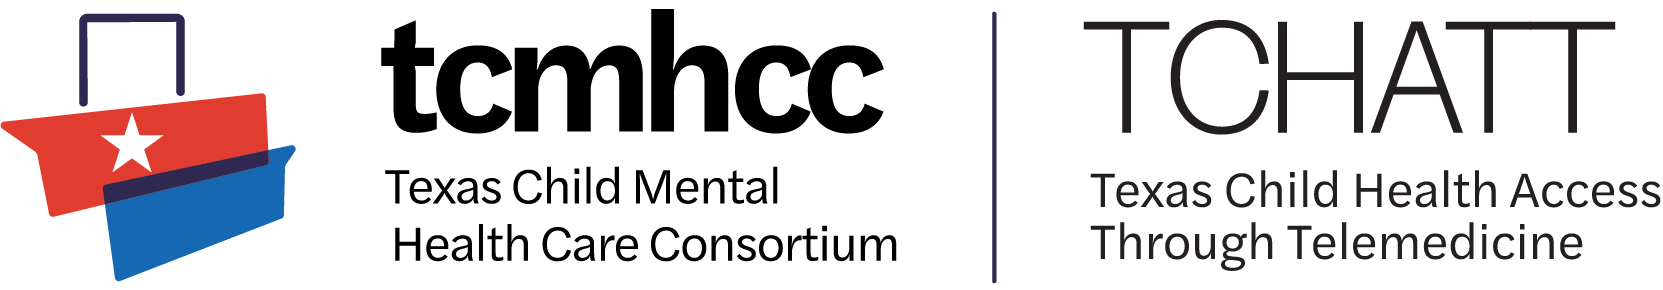 TCHATT Consortium Logo